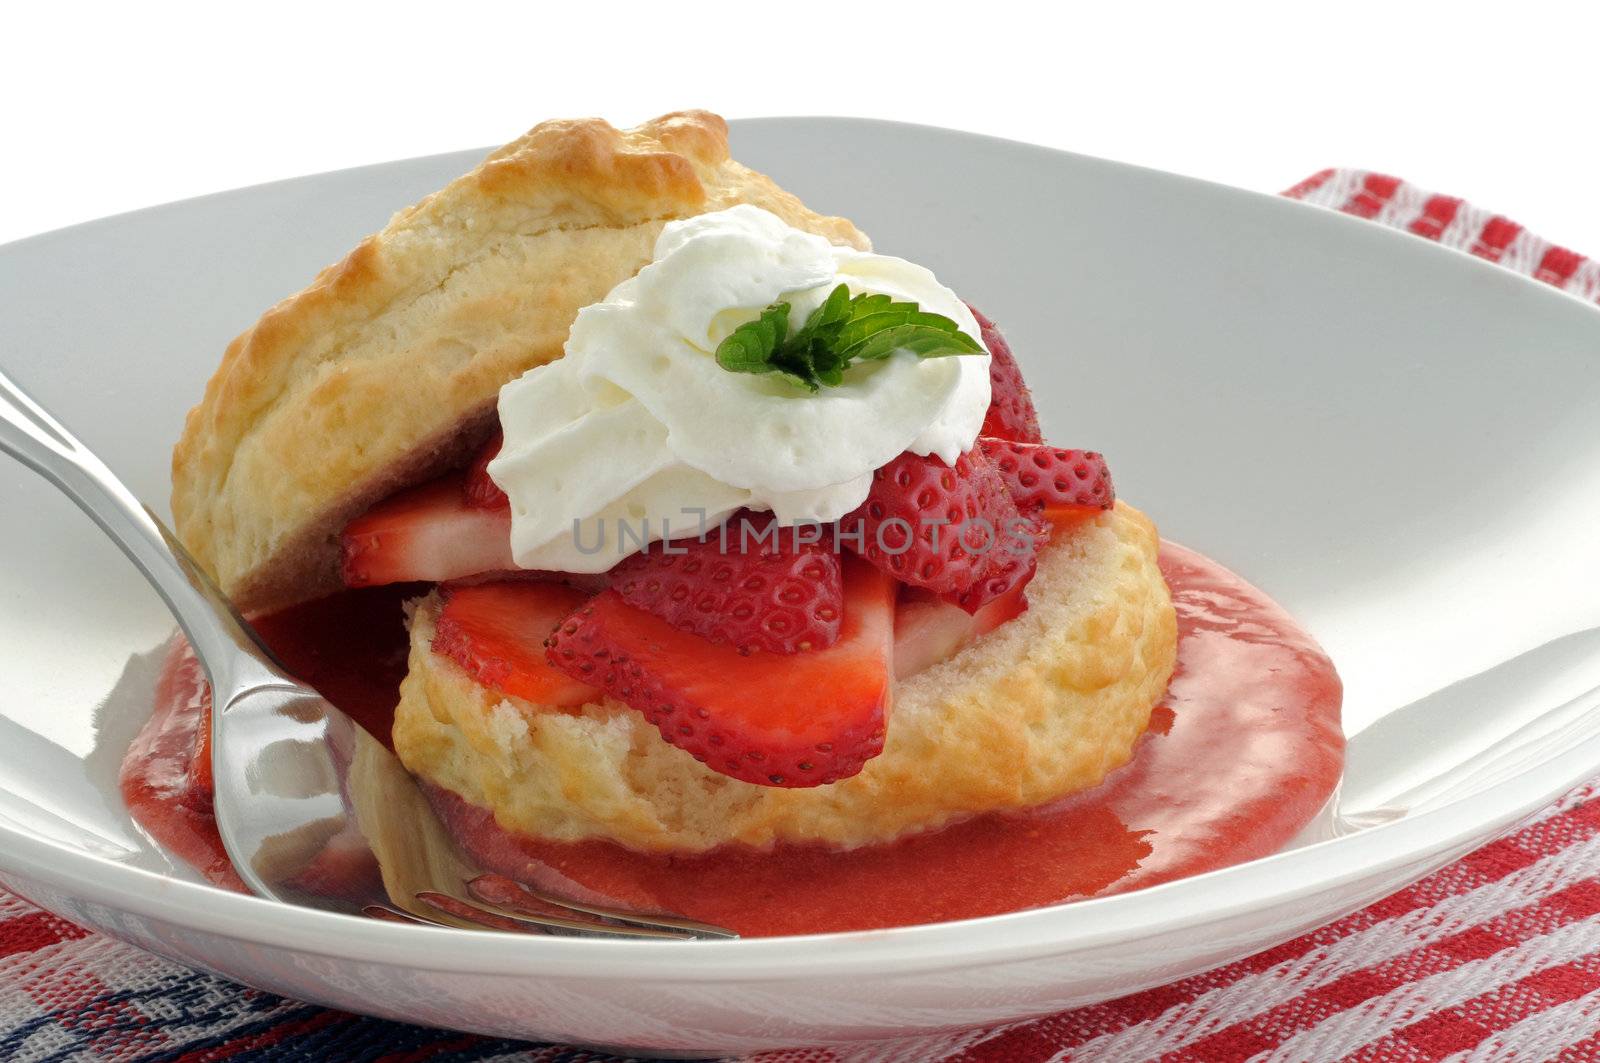 Strawberry Dessert by billberryphotography